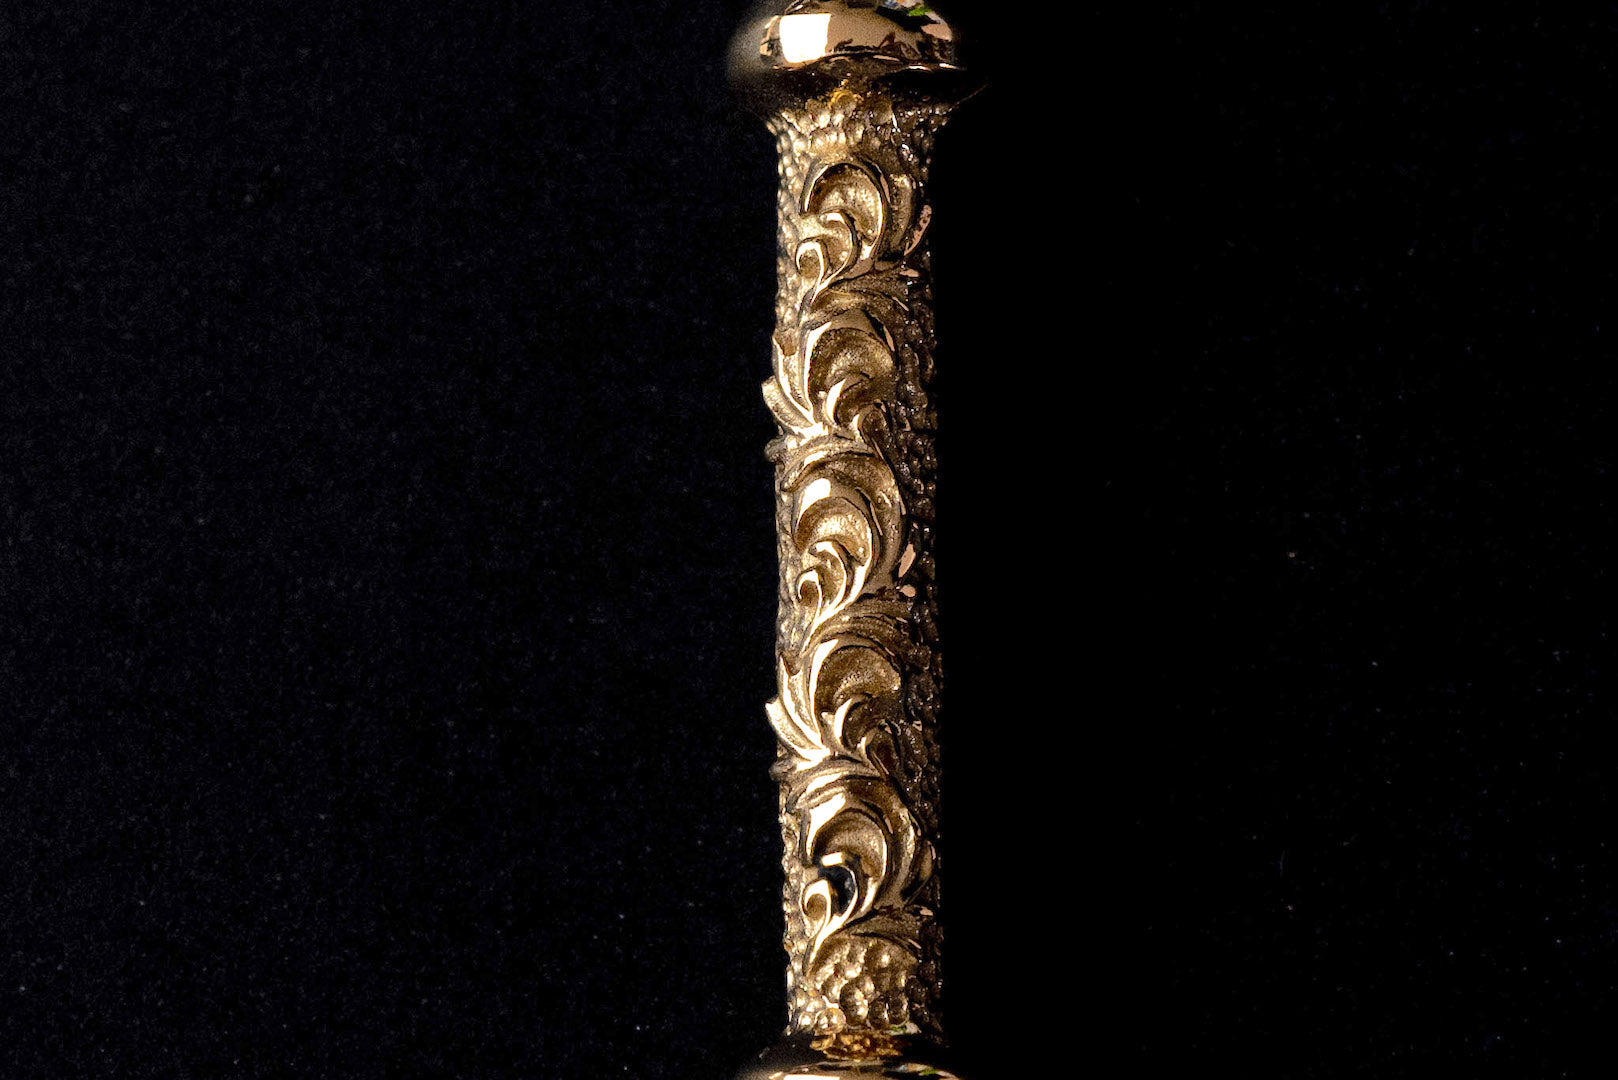 Legend Size Small 18K Gold "Totem Pole" Pendant (P-69-S-18K)